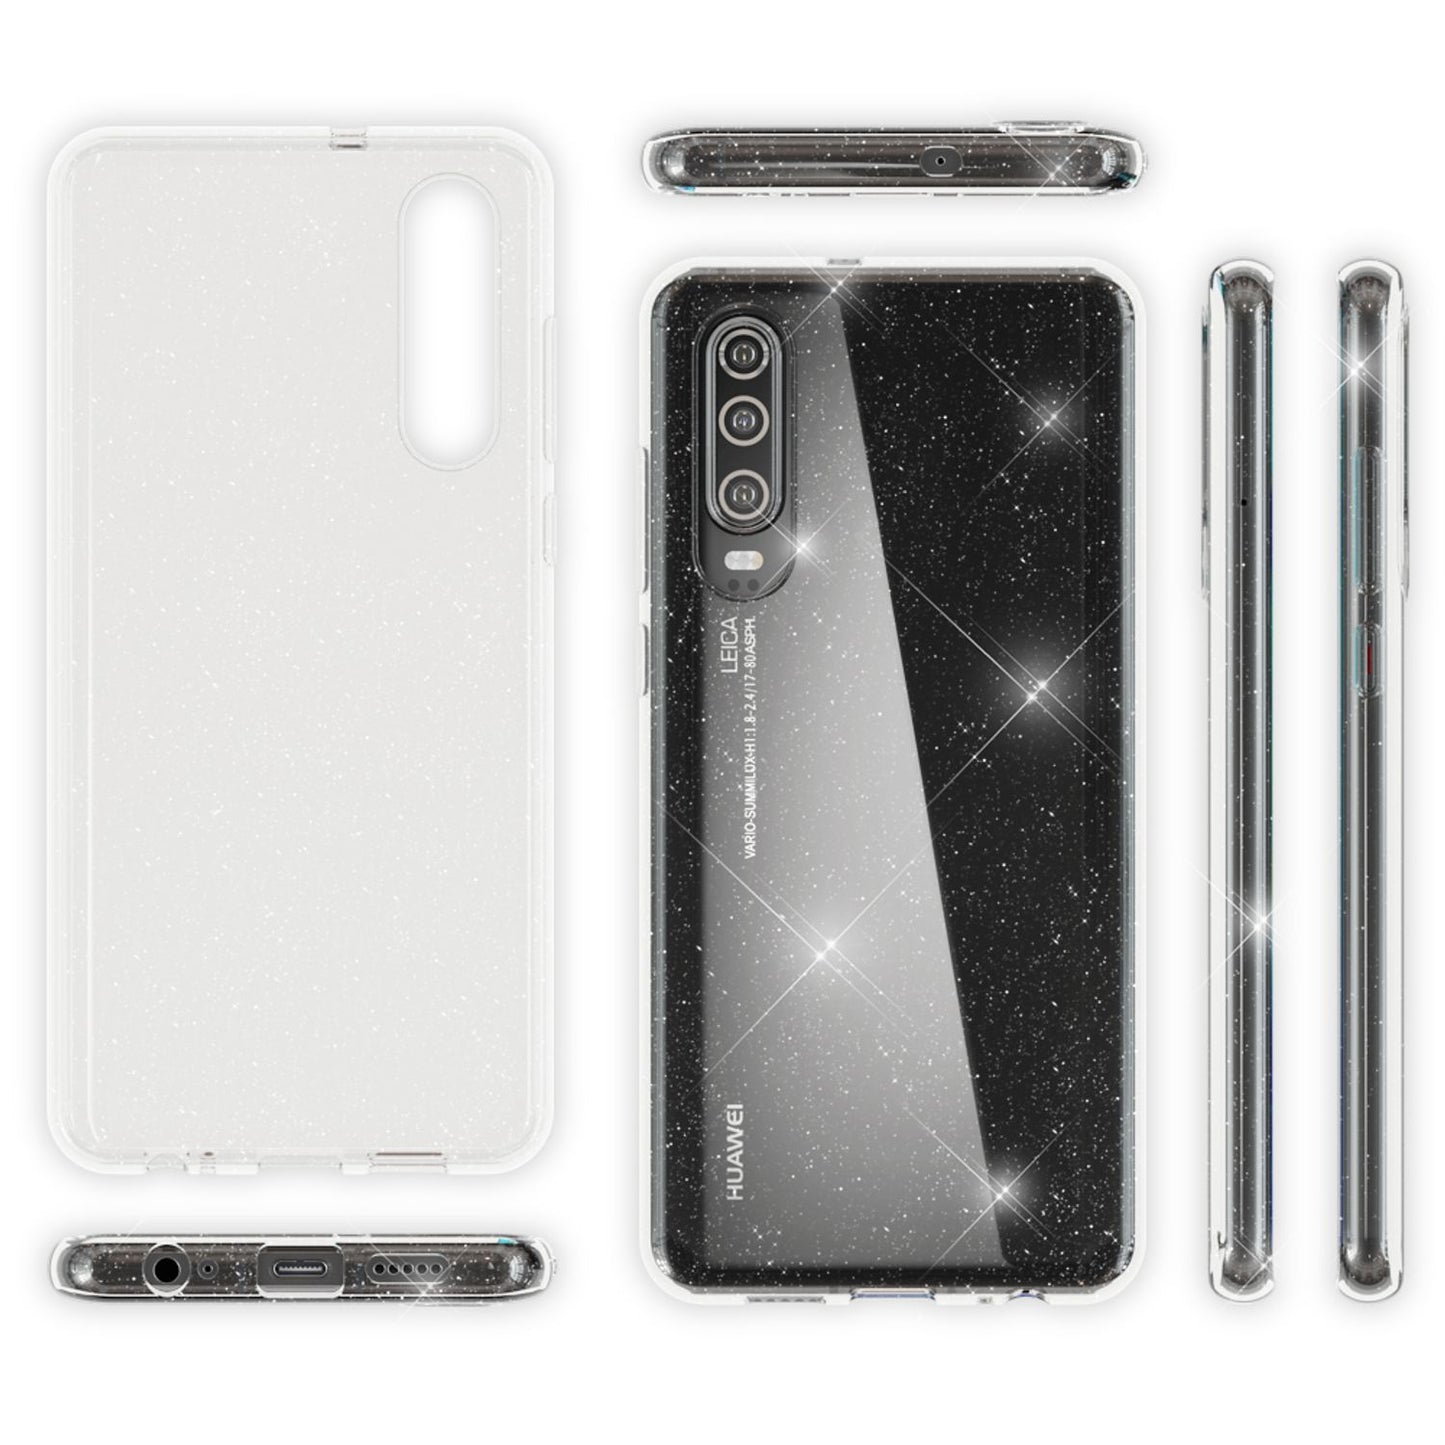 NALIA Glitter Hülle kompatibel mit Huawei P30, Glitzer Handyhülle Silikon Case